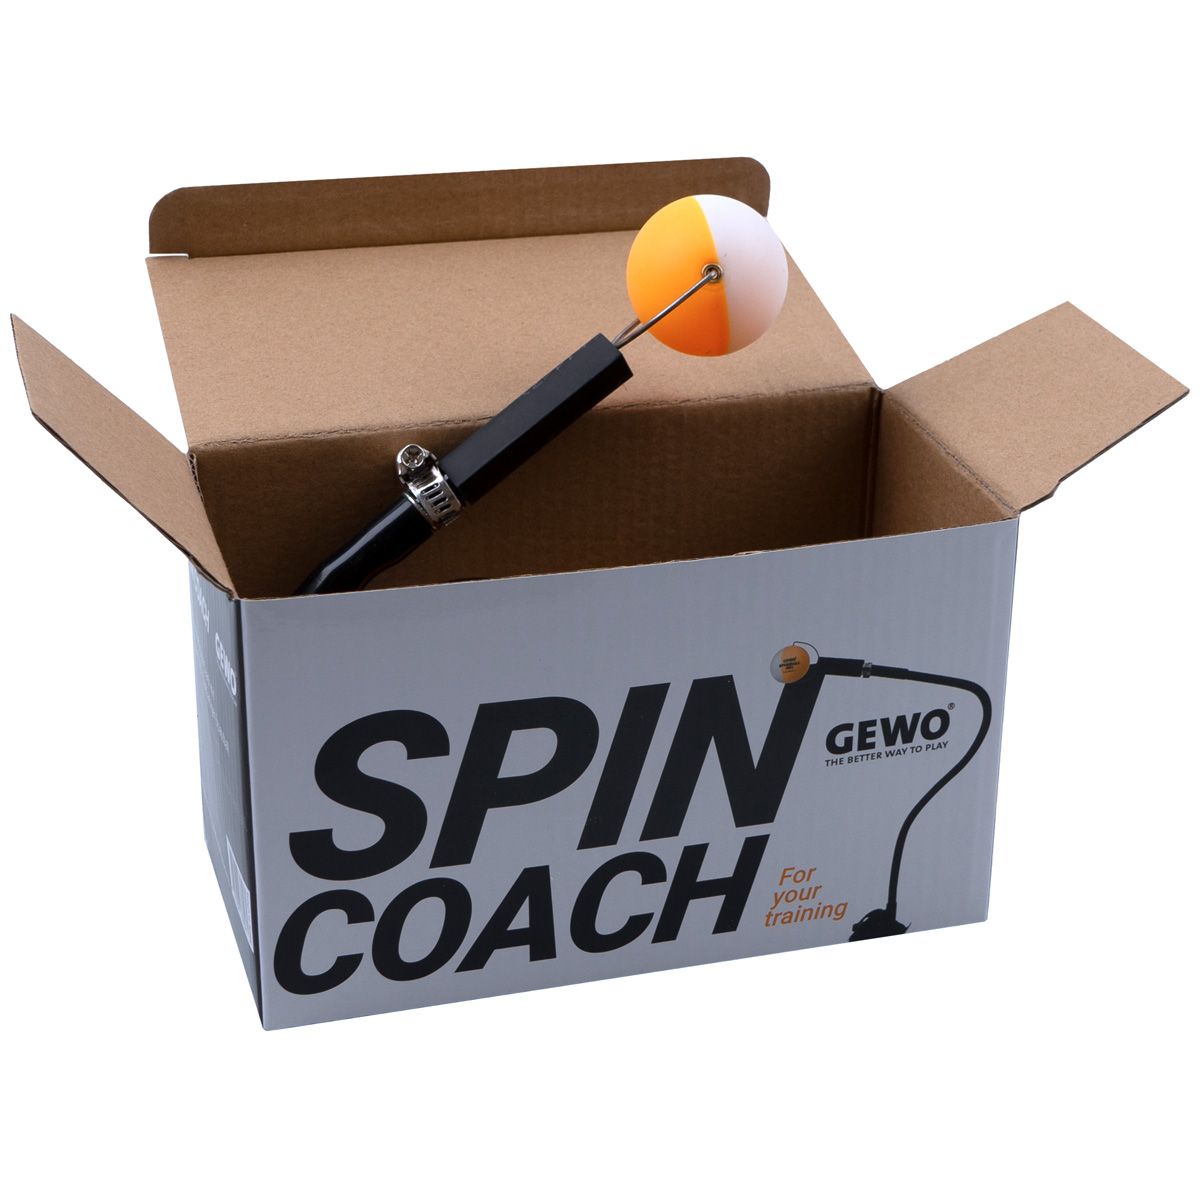 GEWO Spin Coach